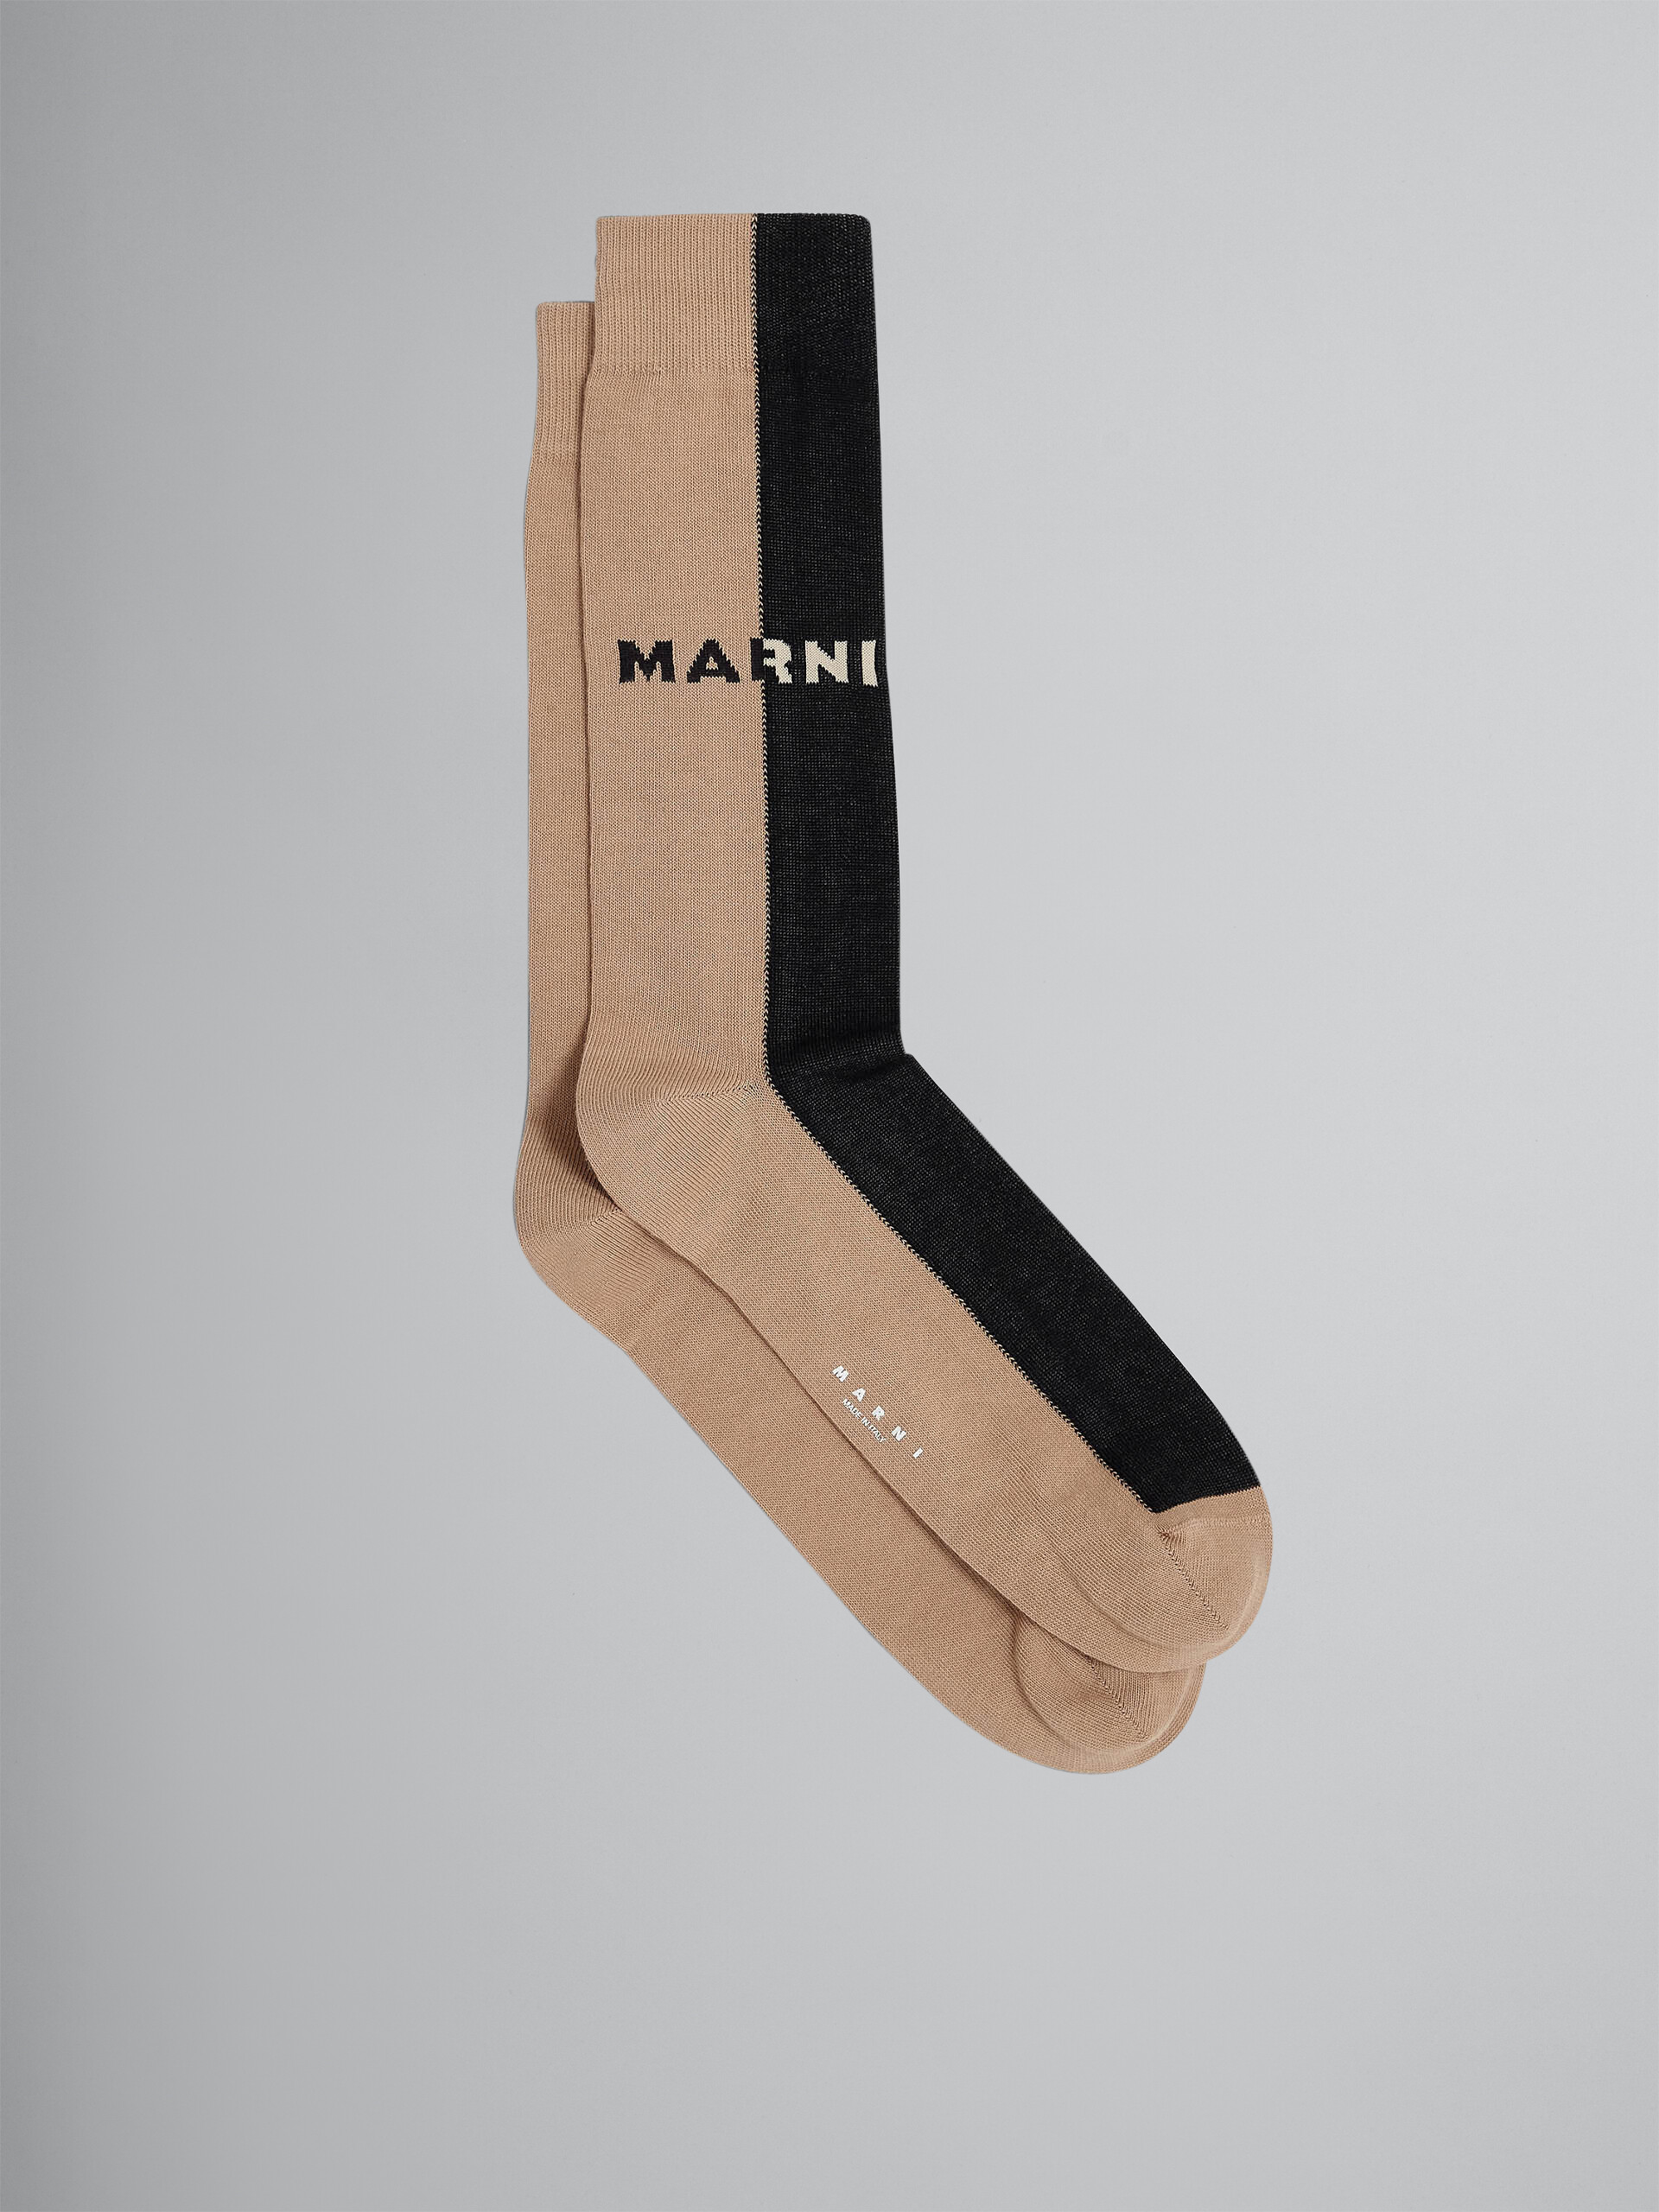 Black bi-coloured cotton and nylon socks - Socks - Image 1